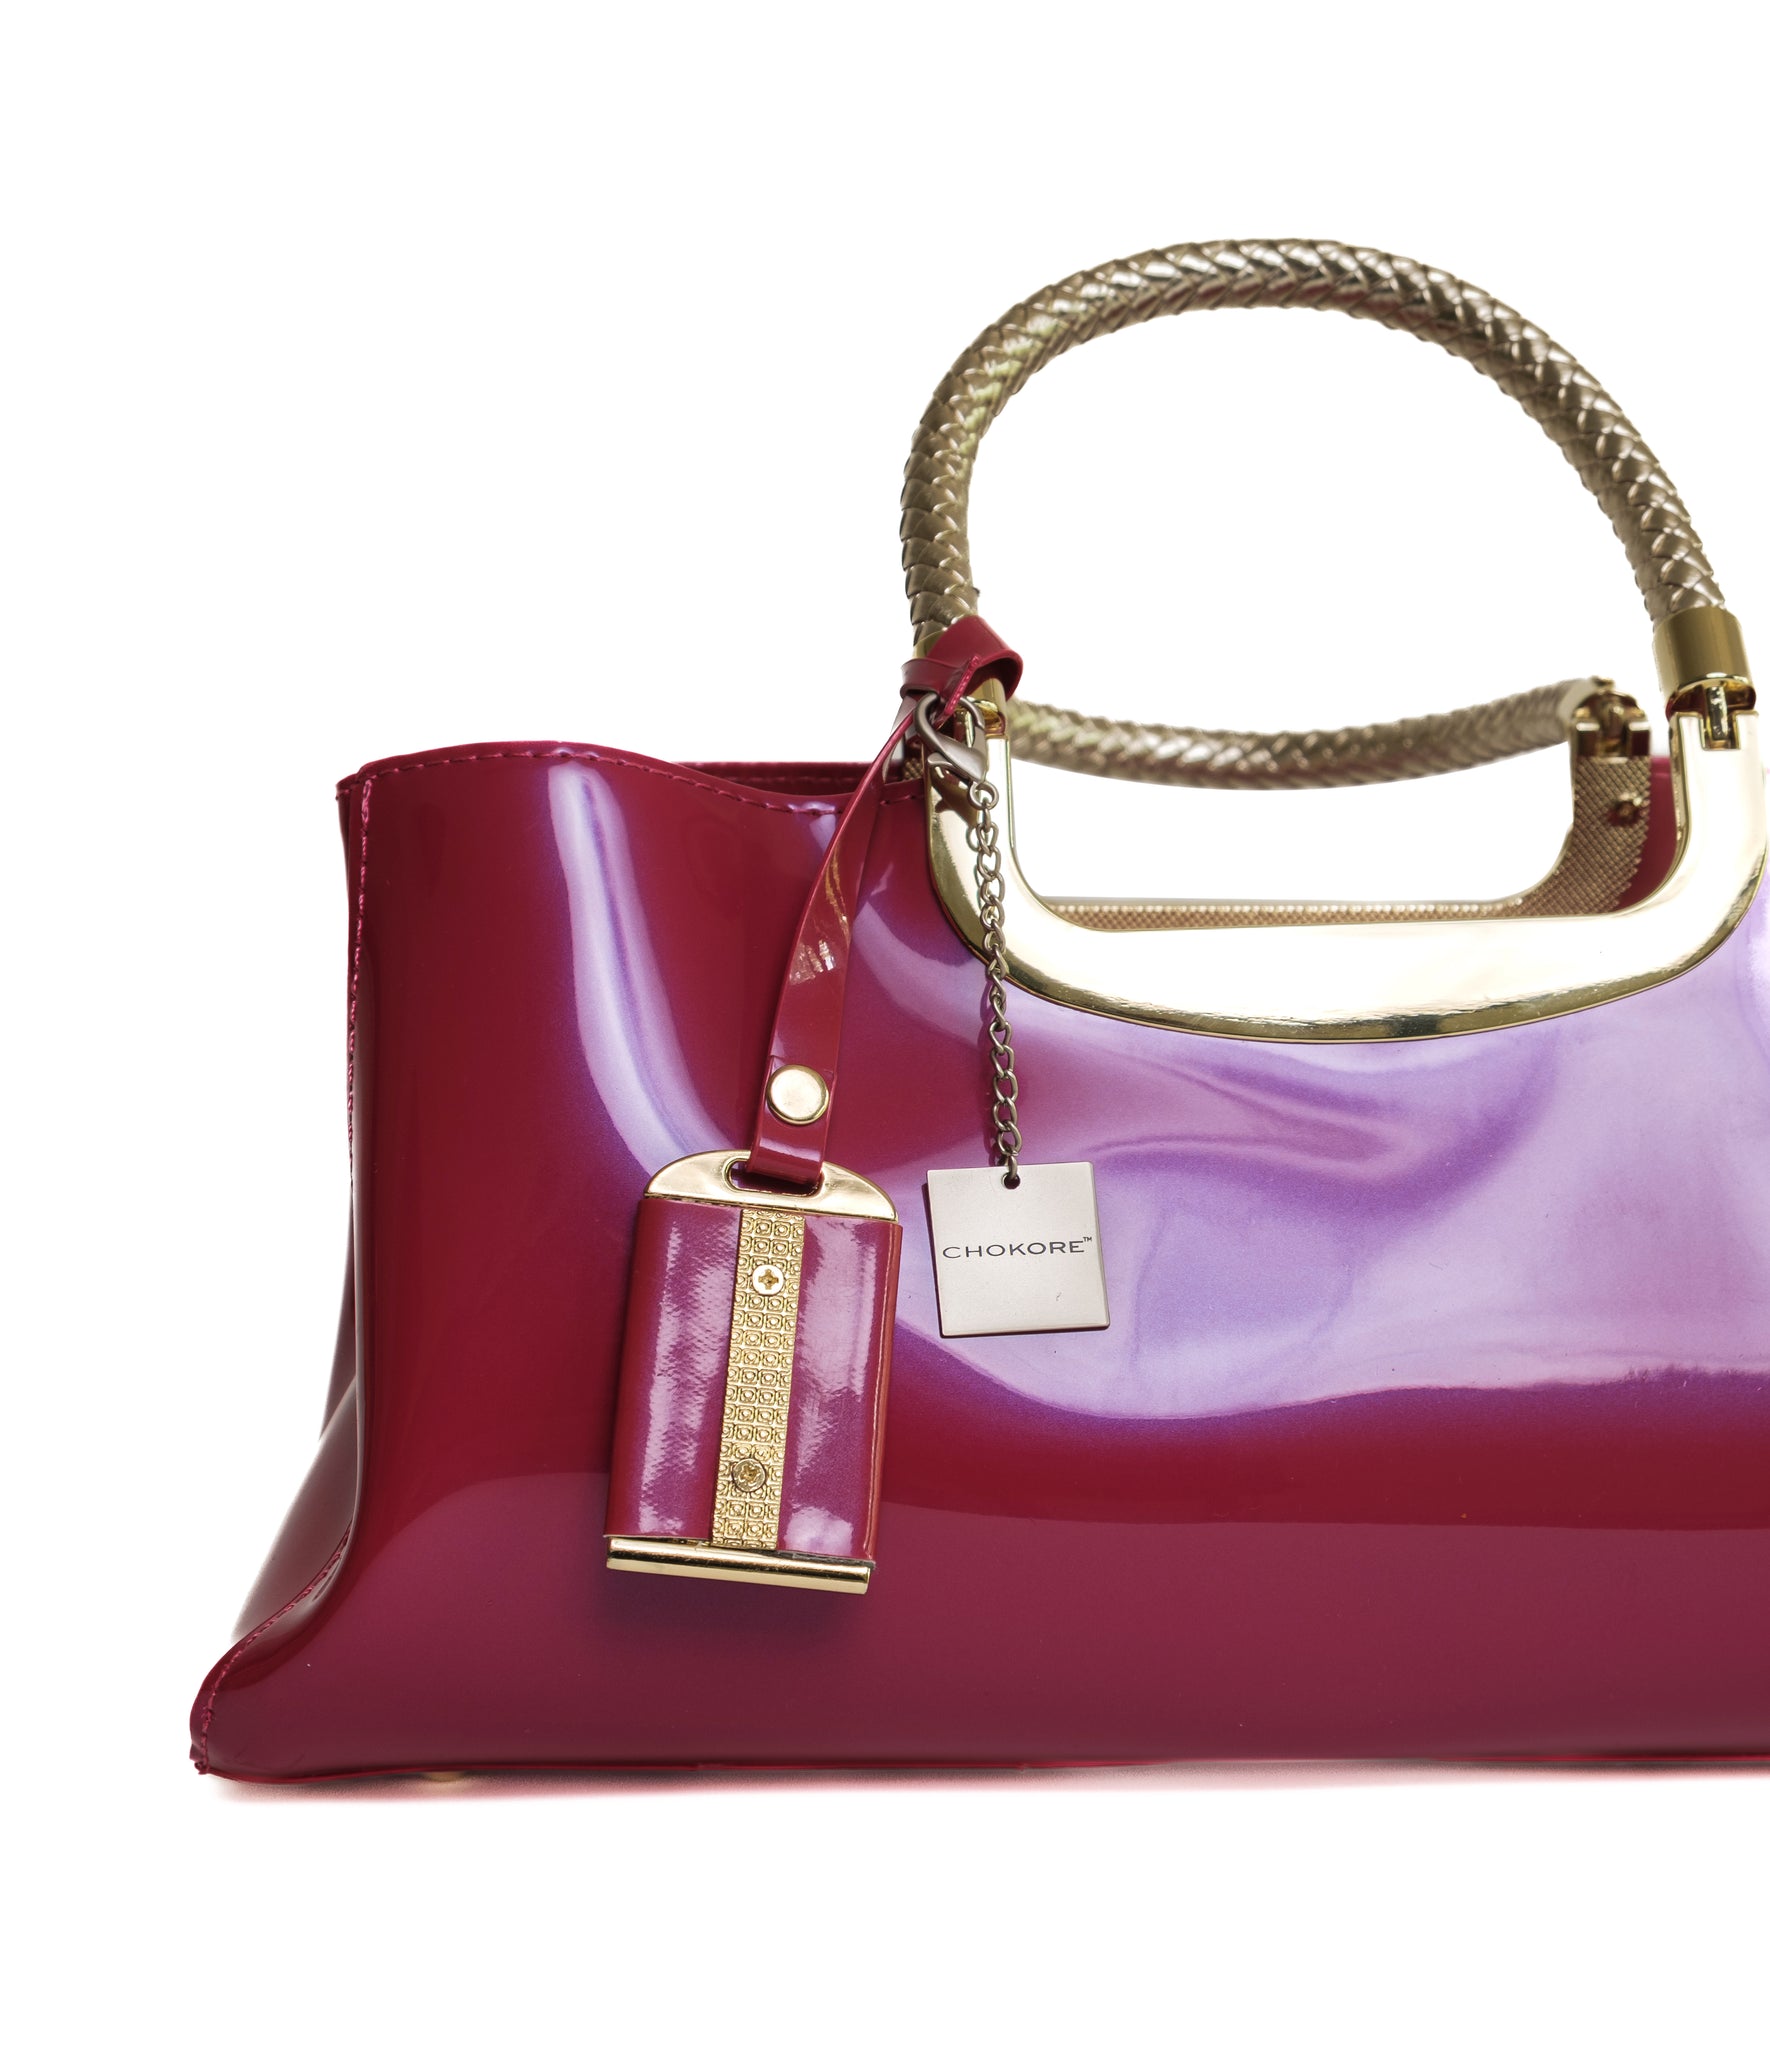 Chokore Luxe Glossy Handbag (Pink)